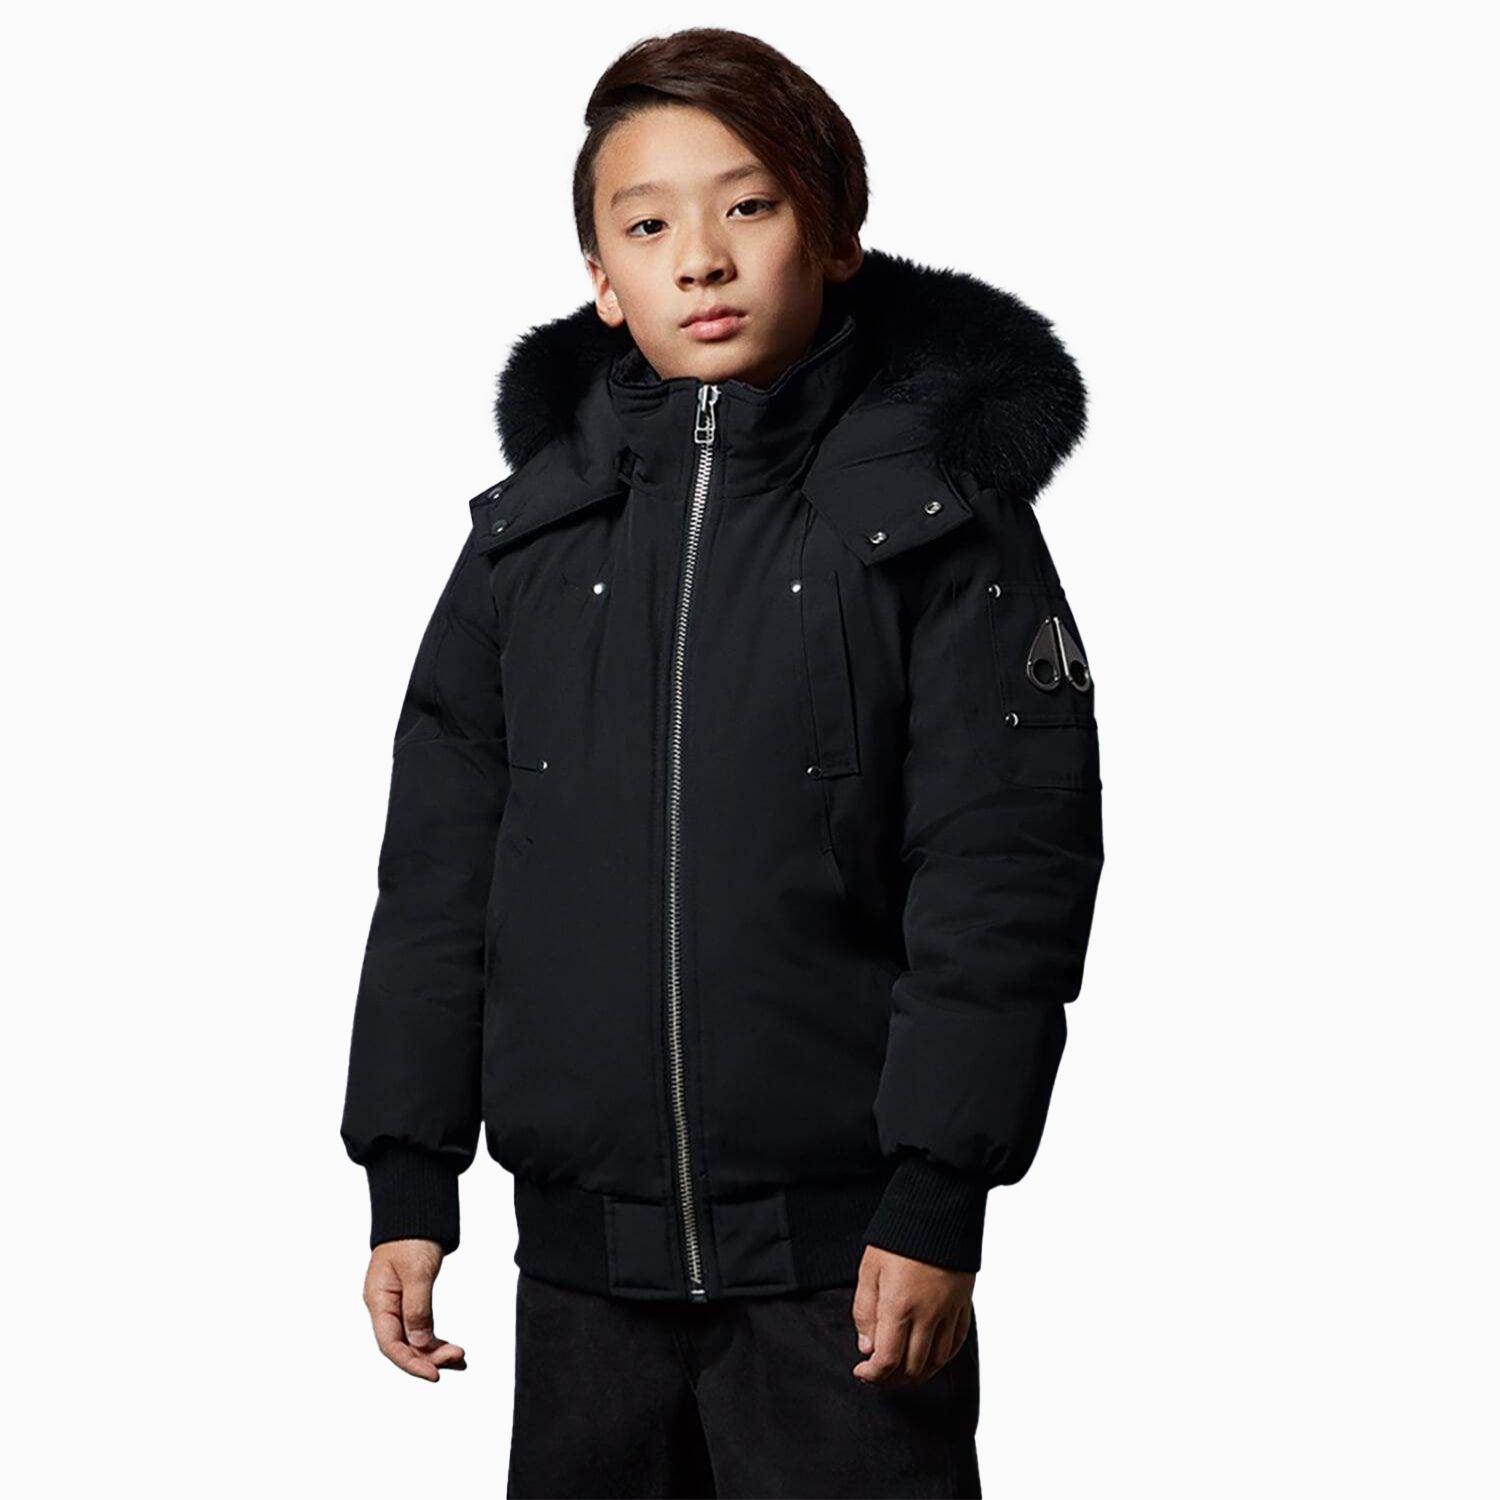 Moose Knuckles Kid's Bomber Jacket With Fur Hood - Color: Black - Kids Premium Clothing -